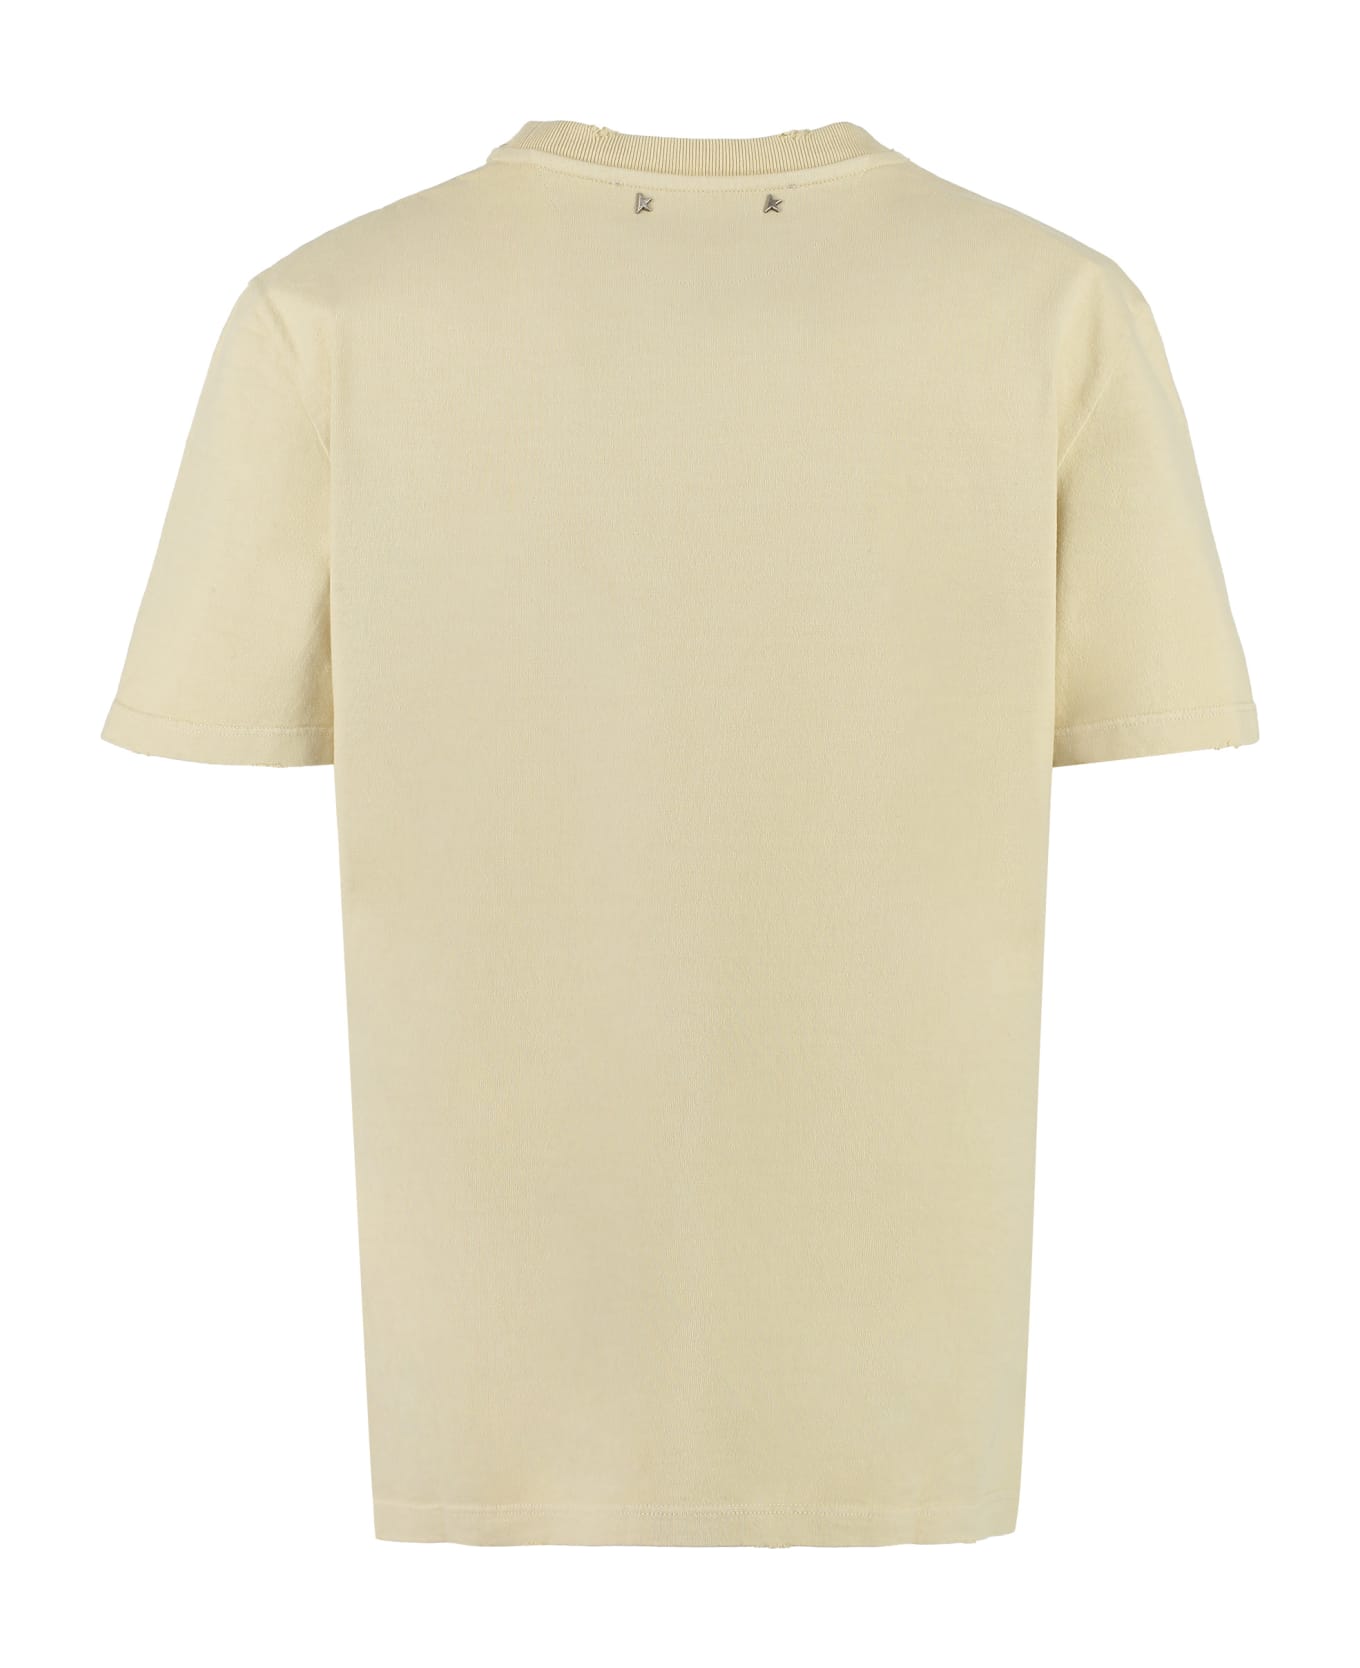 Golden Goose Journey W`s T-shirt Regular Cotton Jersey Rowing Club - Beige